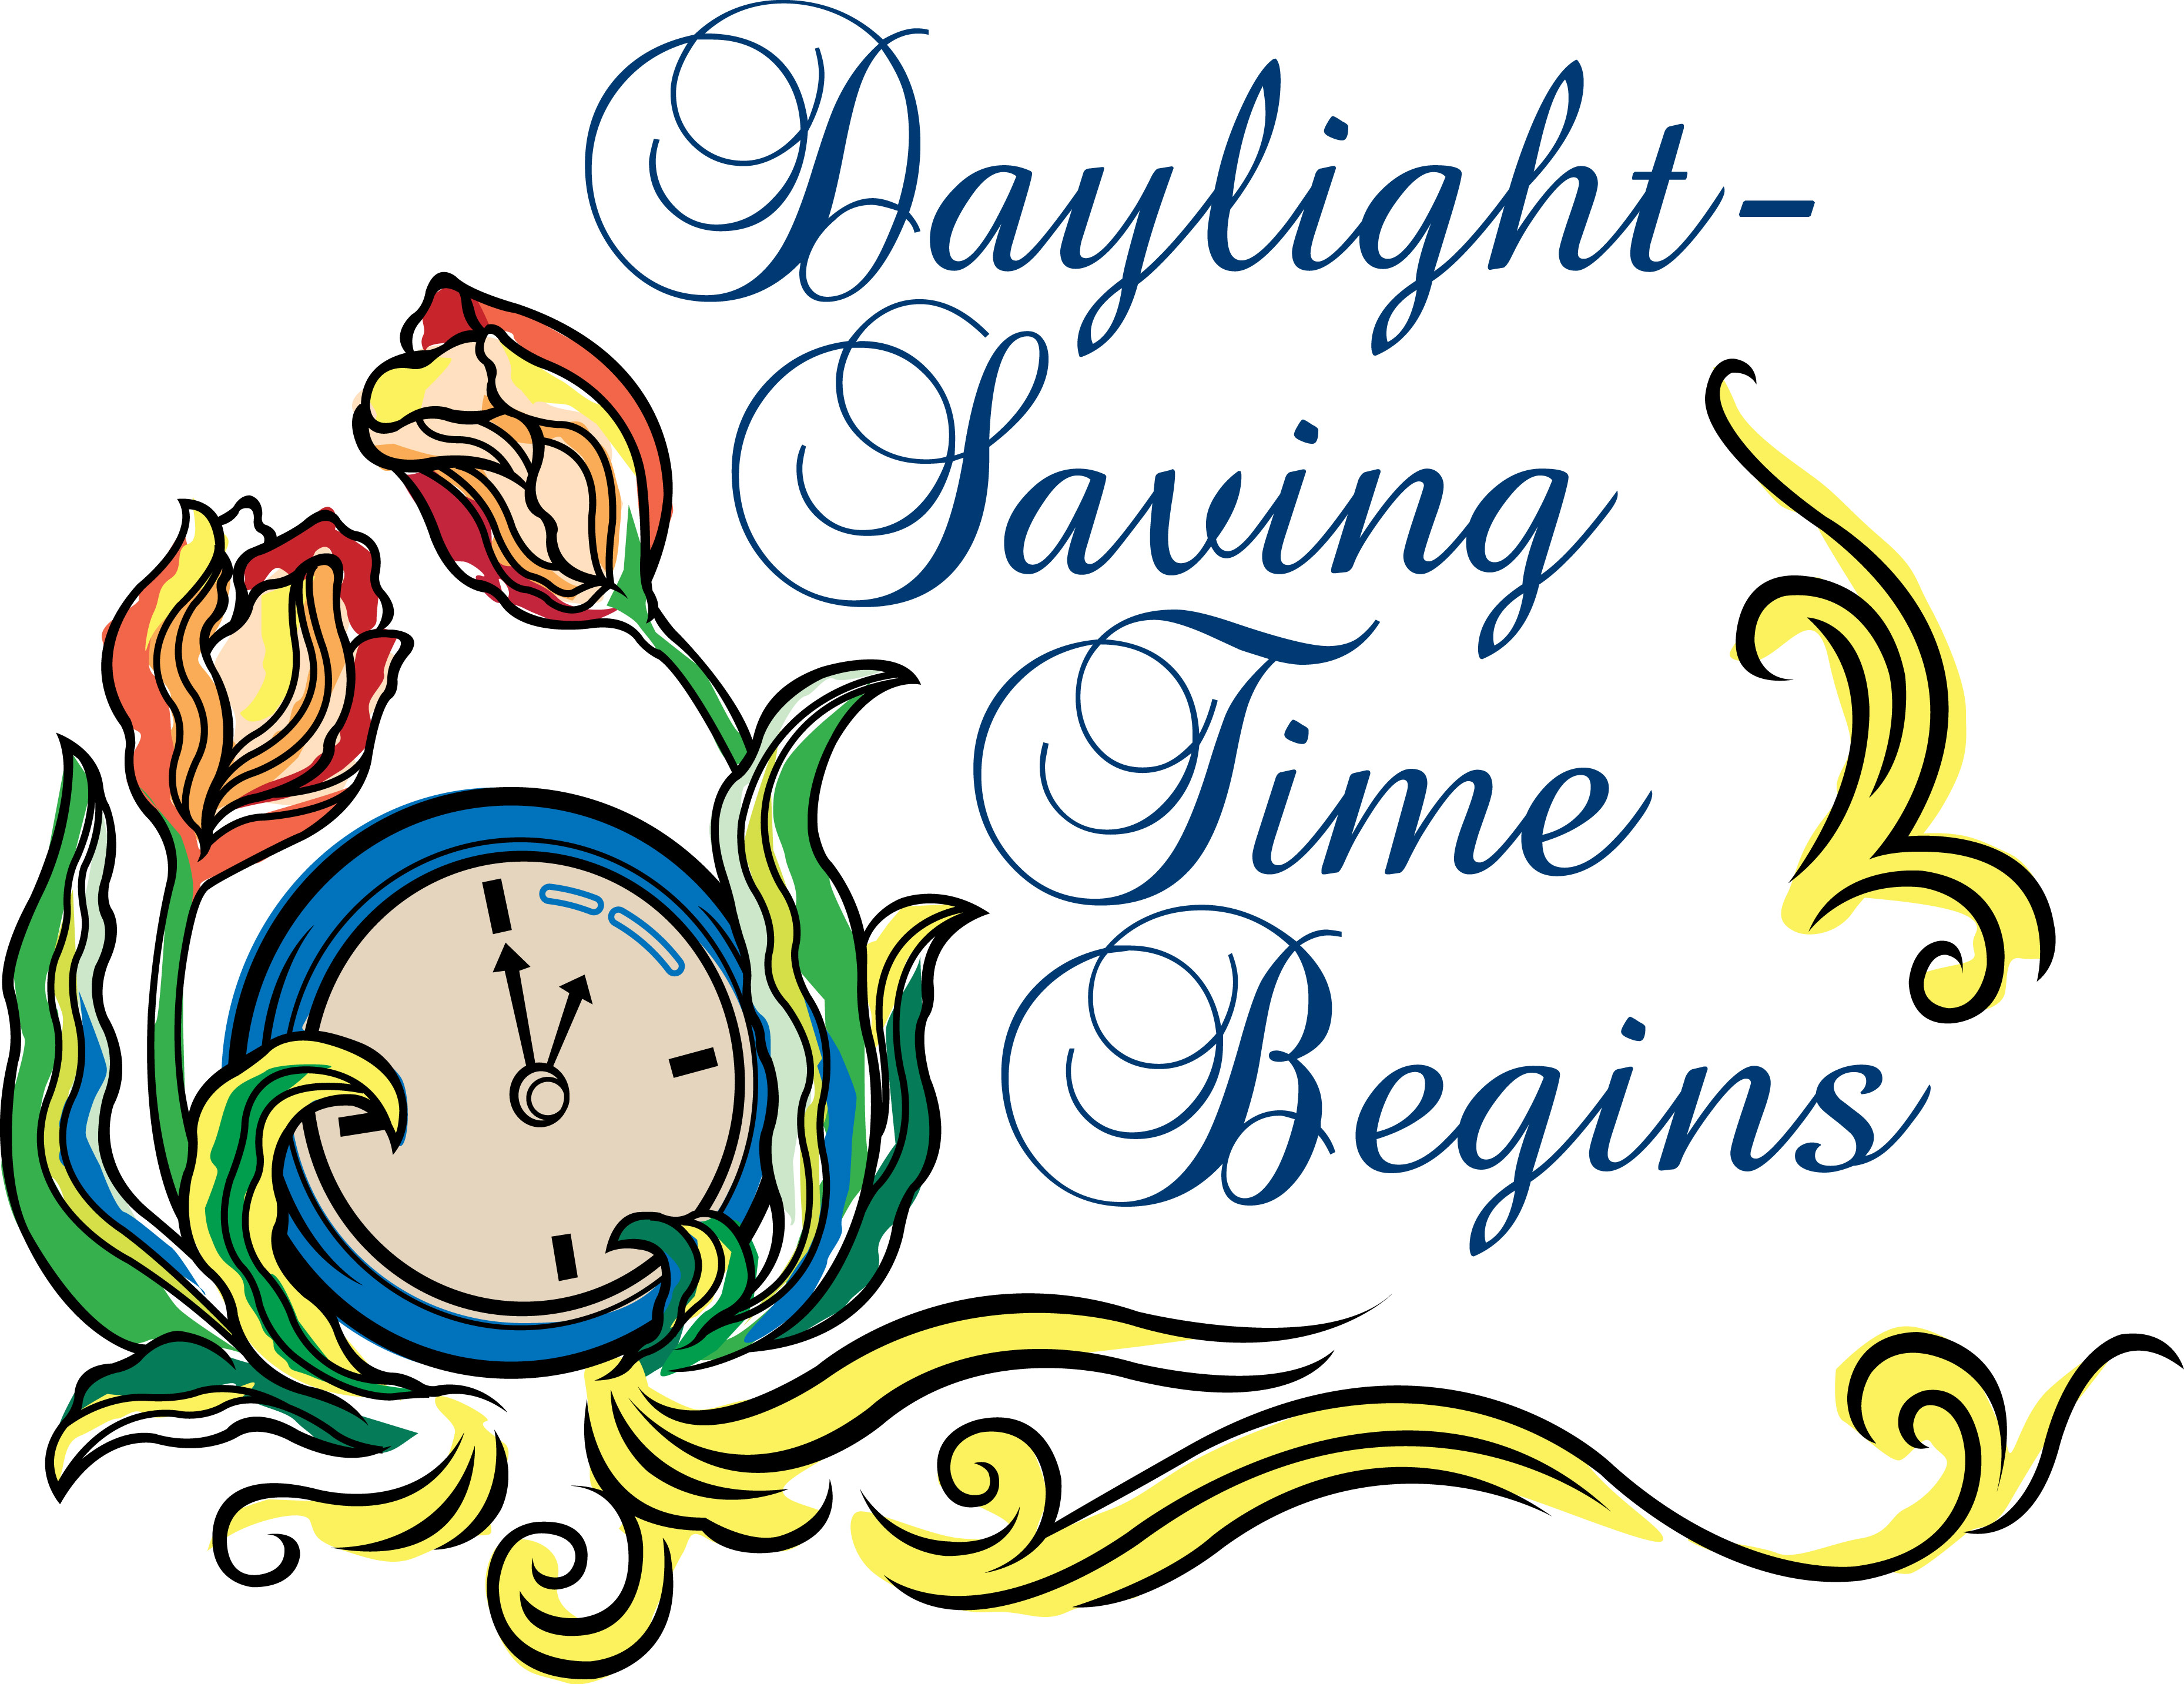 Daylight savings time 2016 calendar clipart